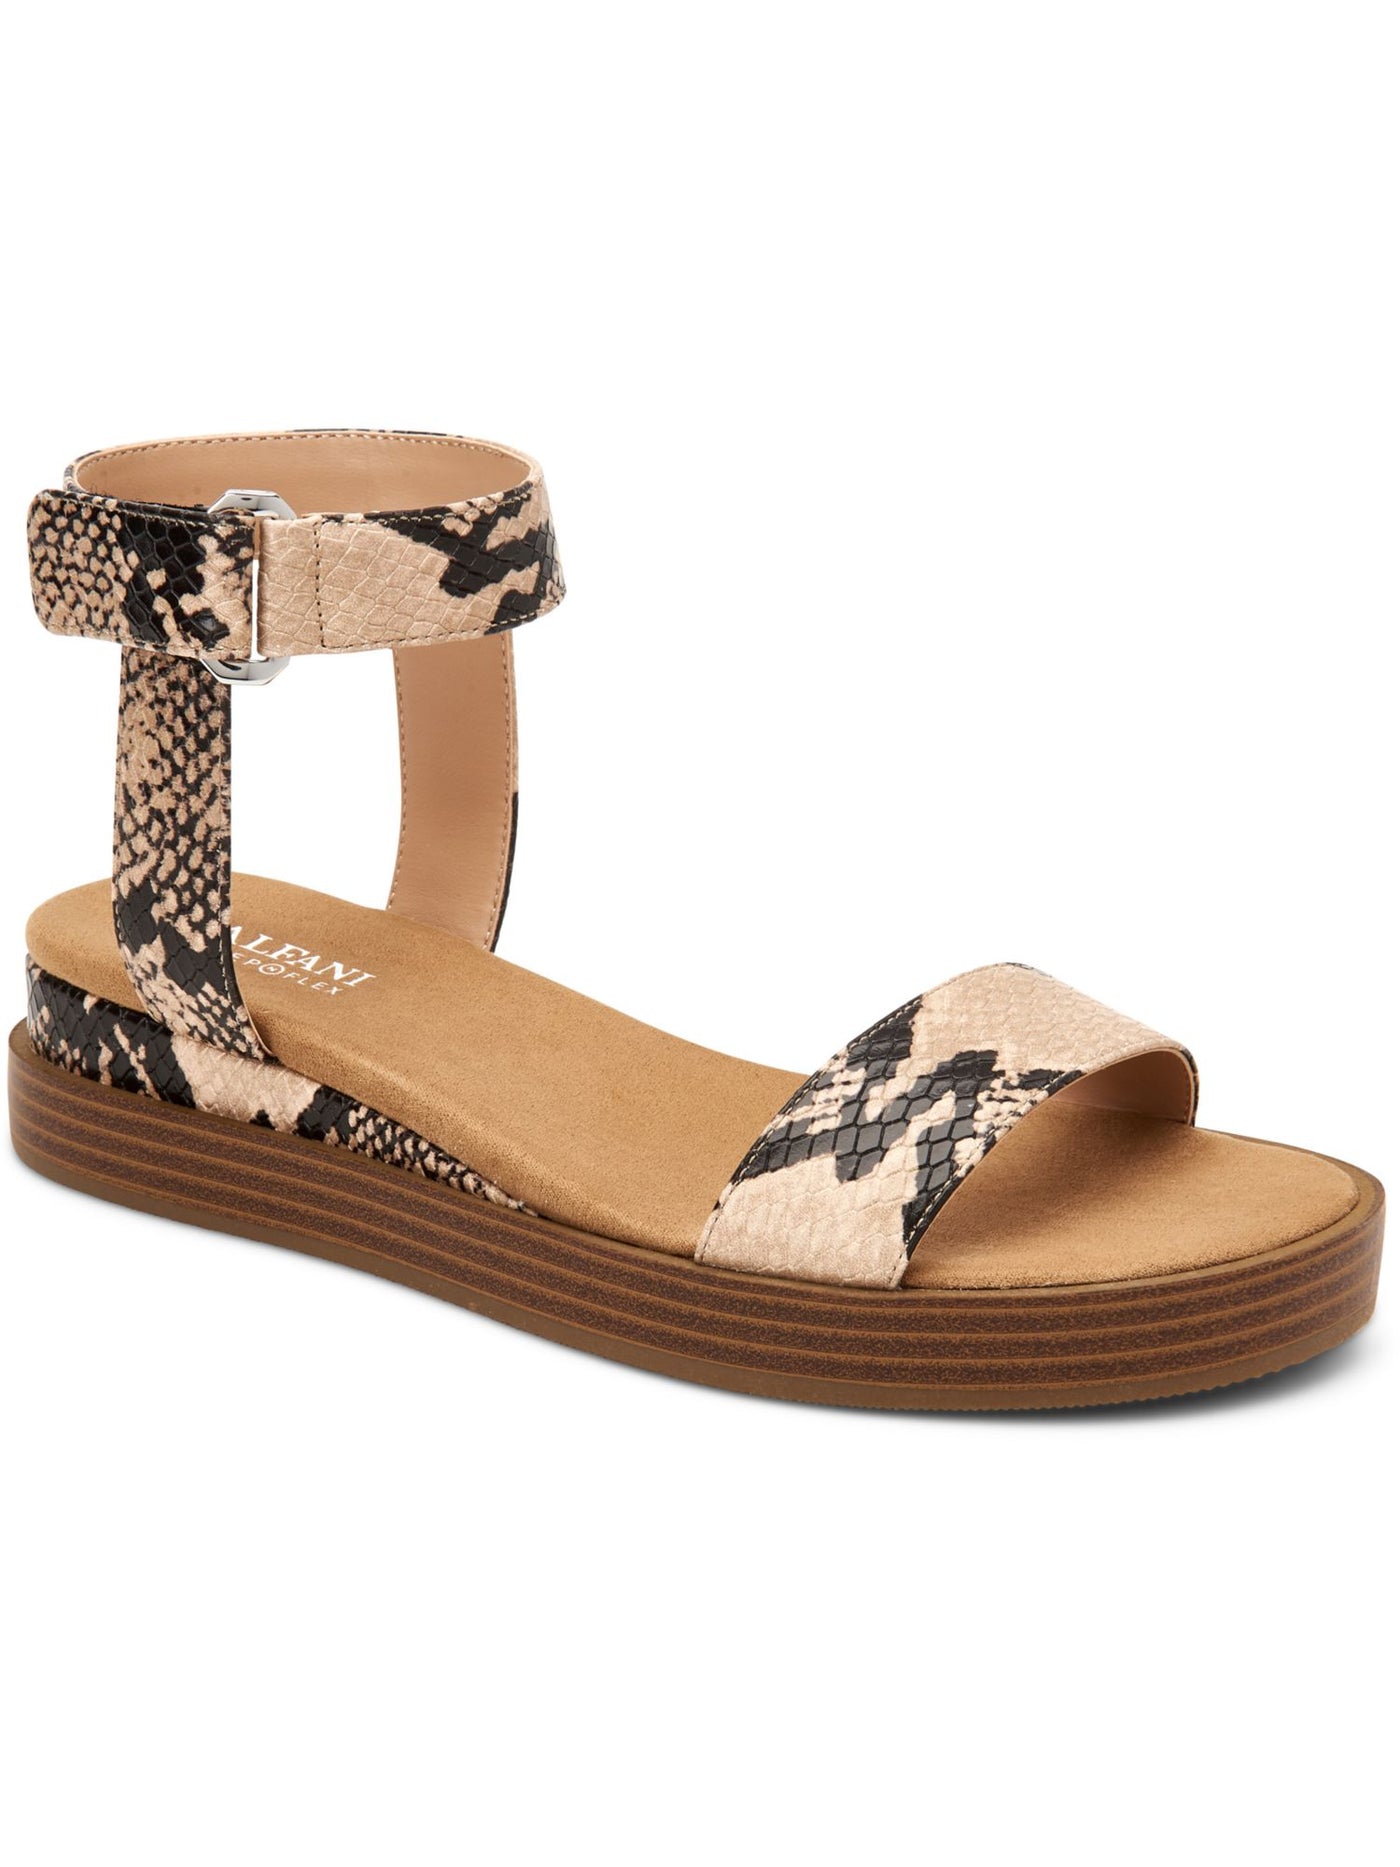 ALFANI Womens Beige Snake Print Ankle Strap Cherryll Round Toe Wedge Sandals 7 M